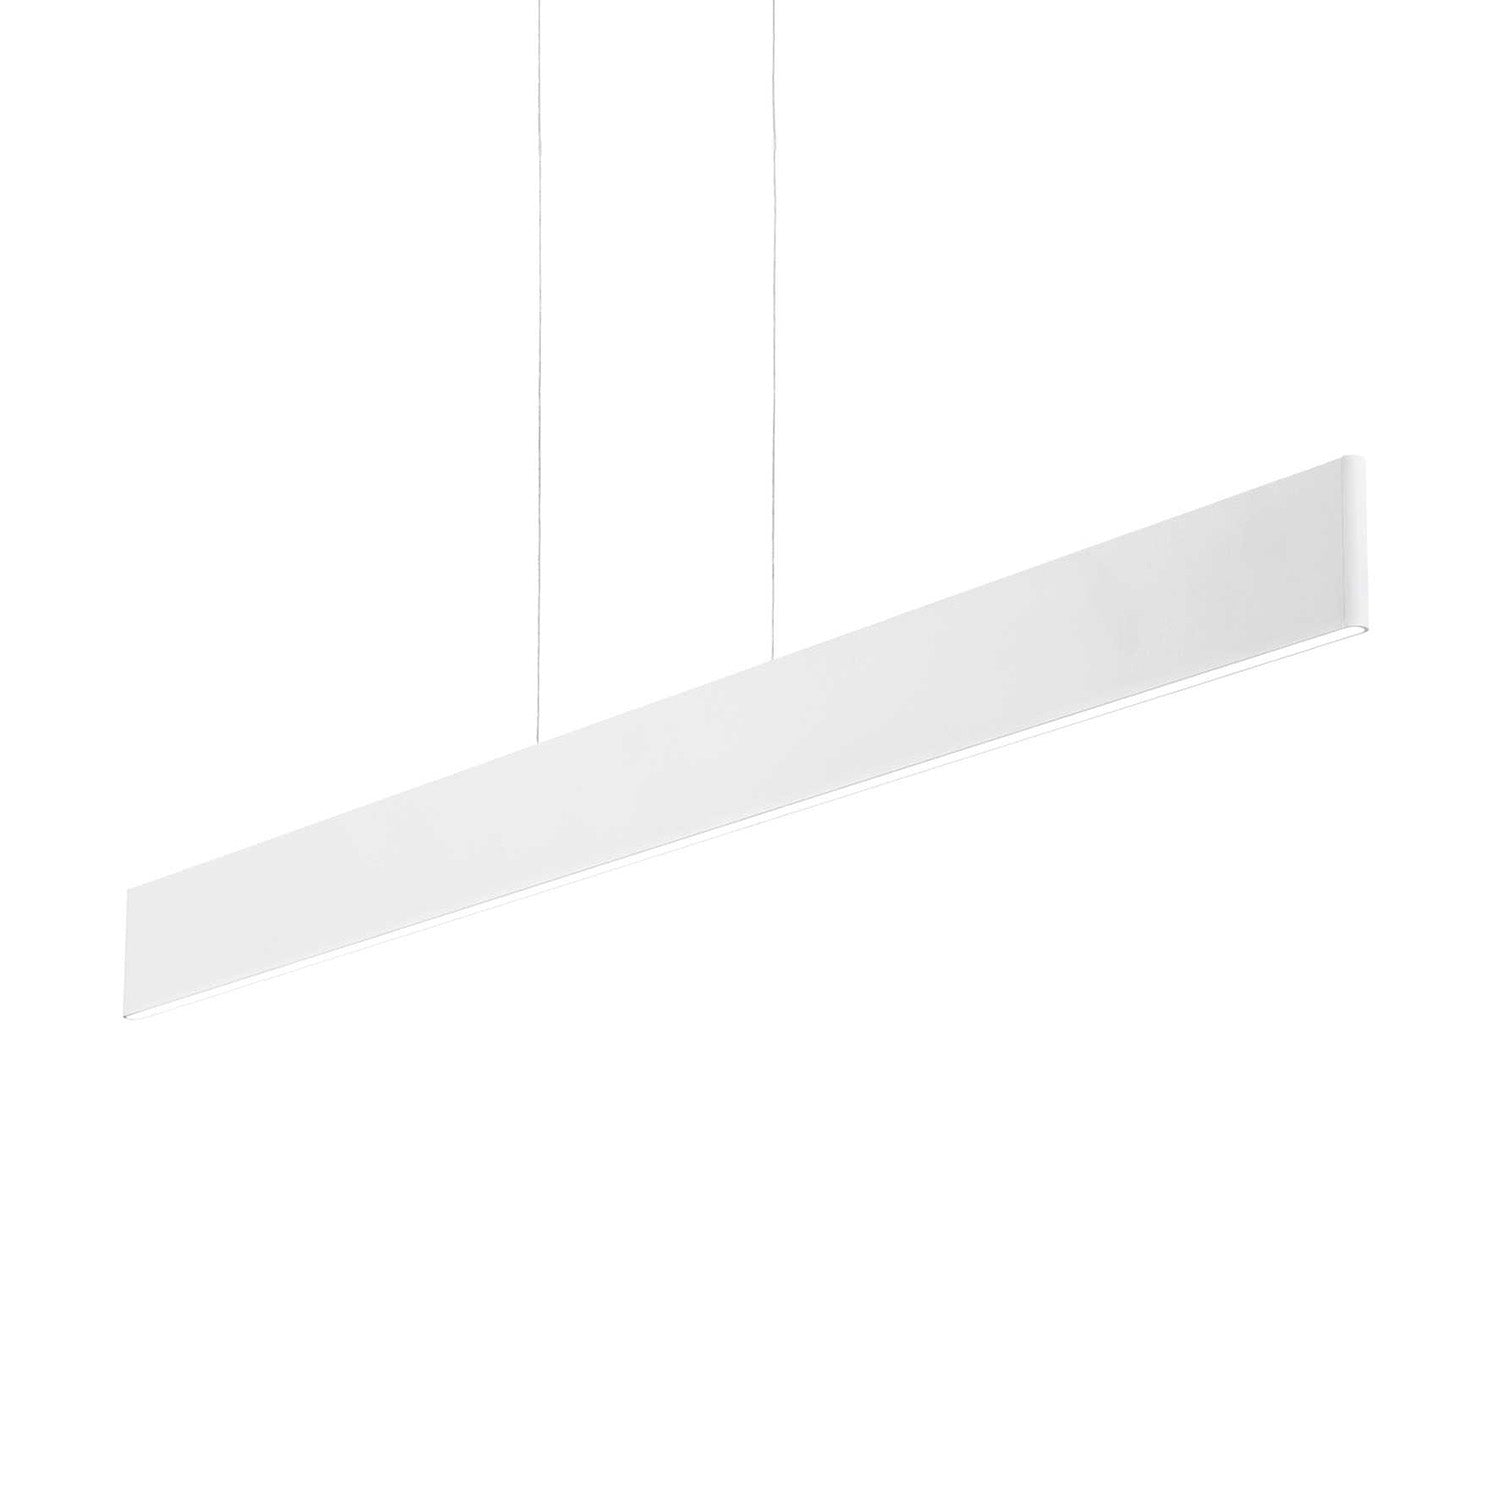 DESK – Schwarze oder weiße lineare integrierte LED-Pendelleuchte